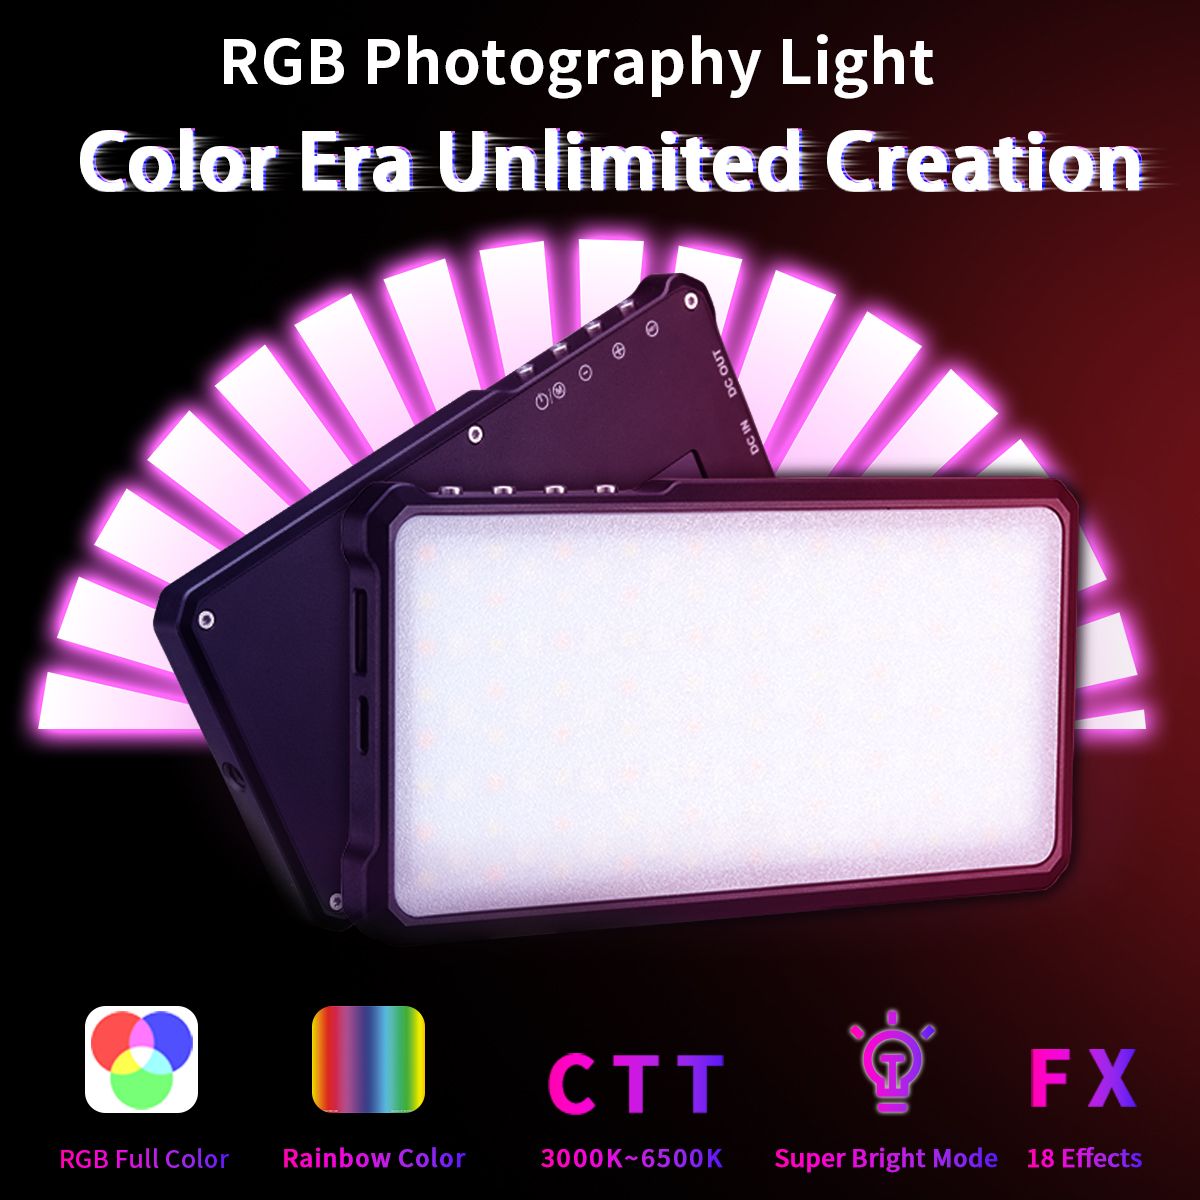 VIJIM-VL-3-RGB-LED-3000K-6500K-Video-Light-with-OLED-Display-CRI-96-Vlog-Video-Photography-Fill-Ligh-1683124